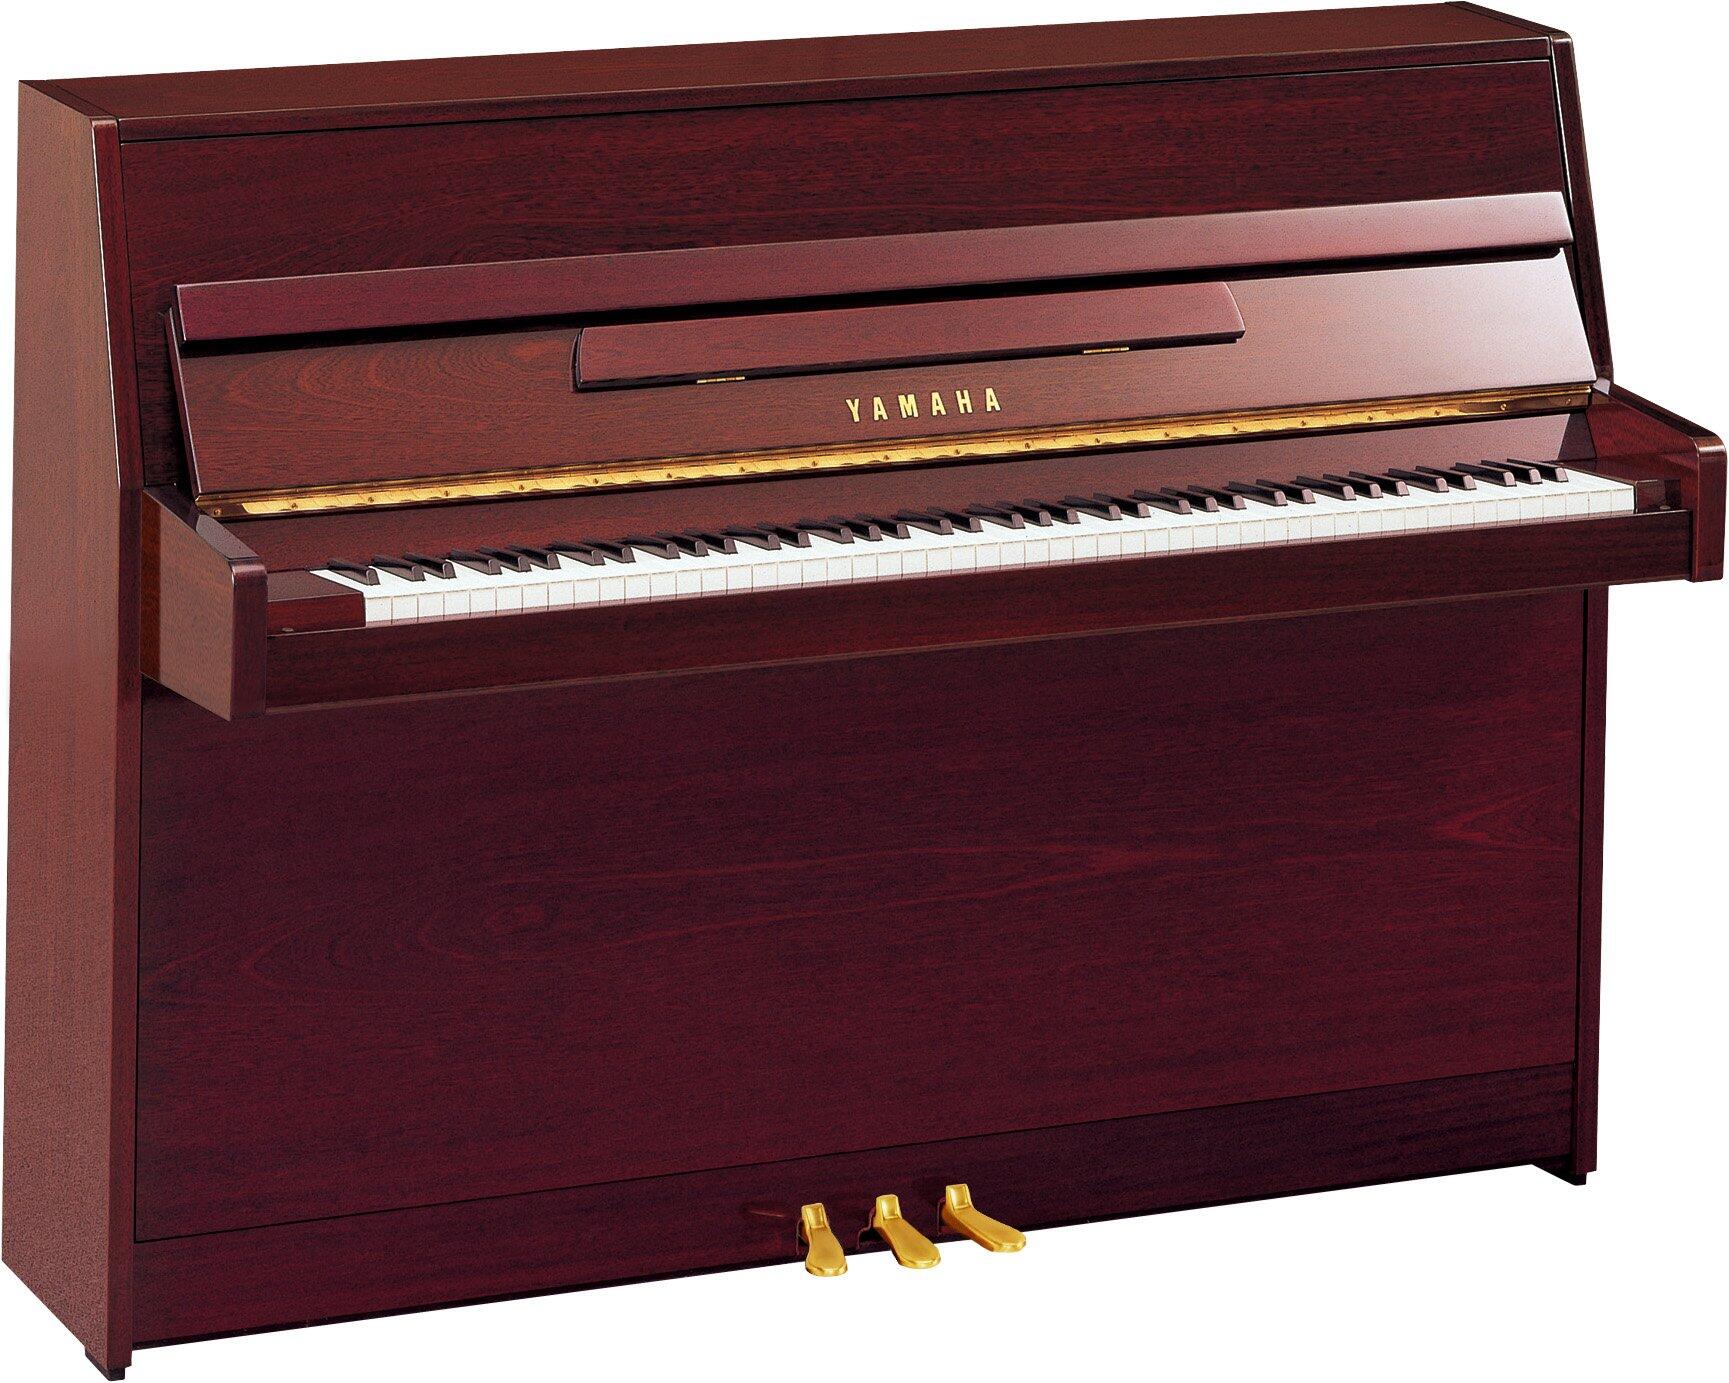 Yamaha Pianos Silent B1 SC3 PM Silent Acajou poli-brillant 109 cm : photo 1